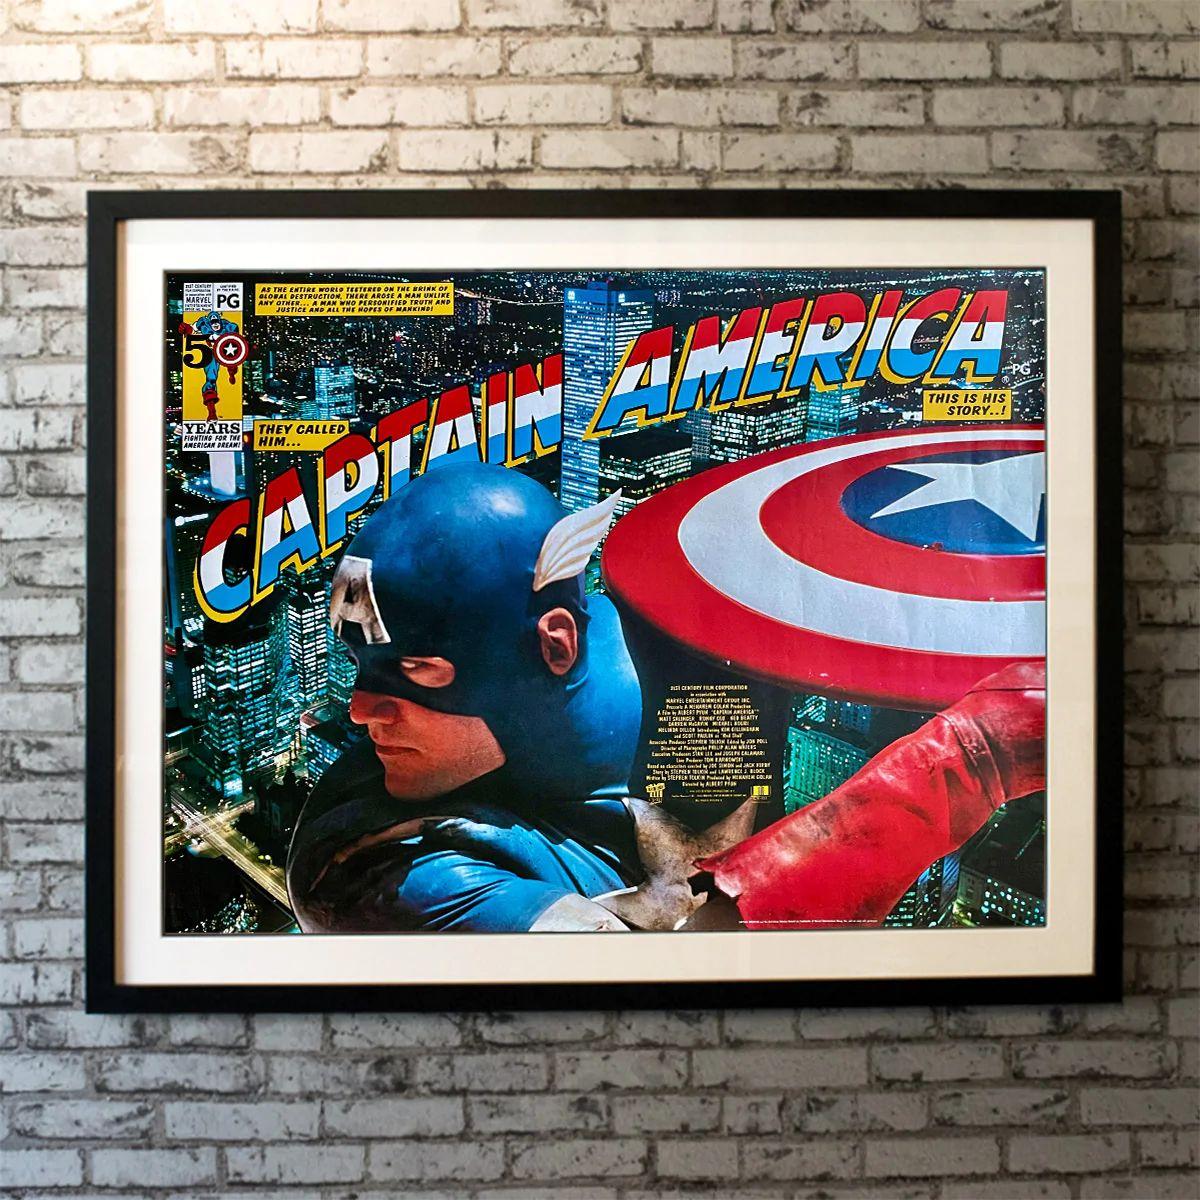 Captain America, unframed poster, 1990

Original British Quad (30 X 40 Inches). Incredibly rare, original UK quad movie poster for Albert Pyun’s 1990 Marvel super hero actioner “Captain America”. One of the best images of Captain America with